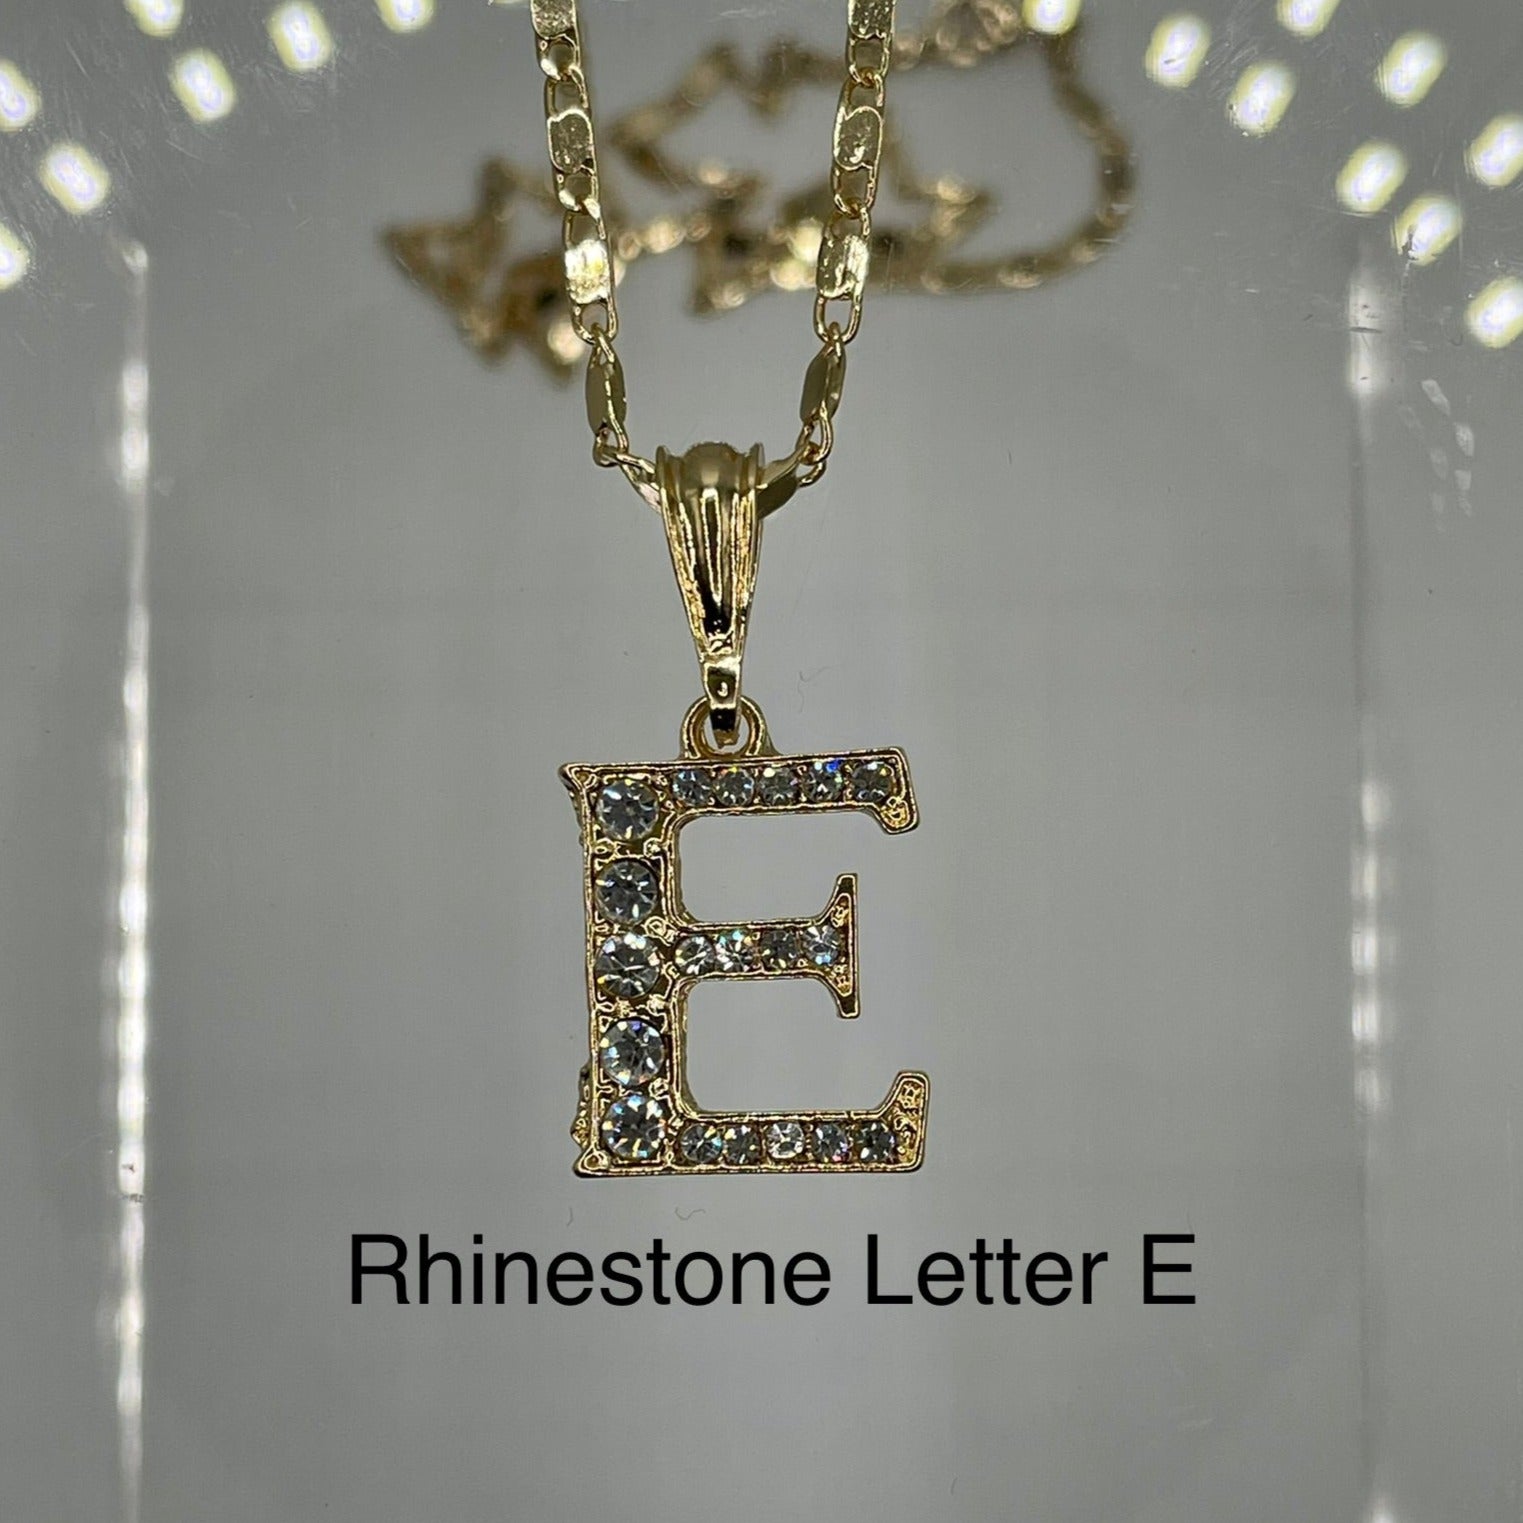 Rhinestone letter E pendant 14k gold plated on gold plated cute necklace. Letter pendants.